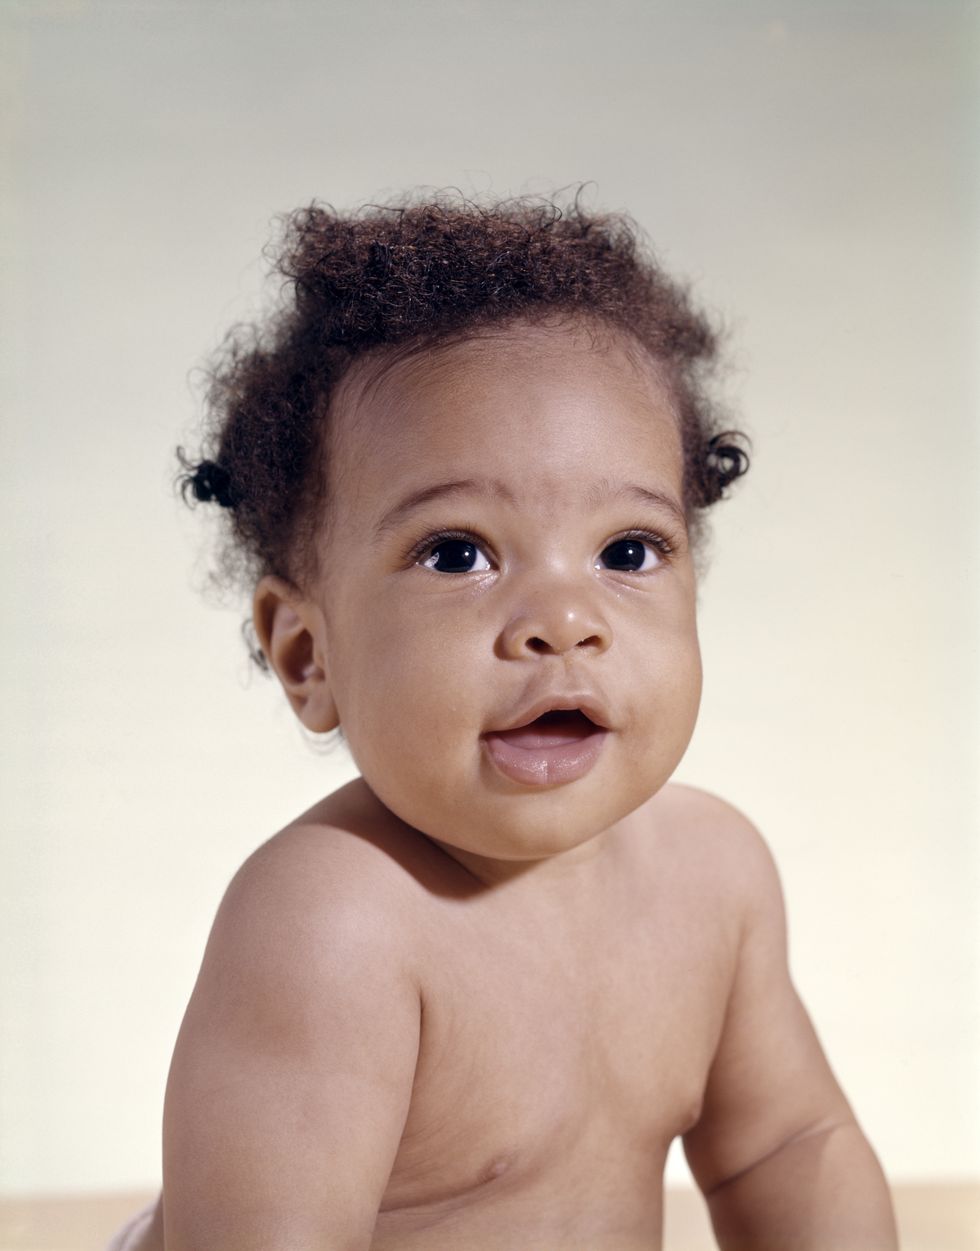 portrait of african american baby boy